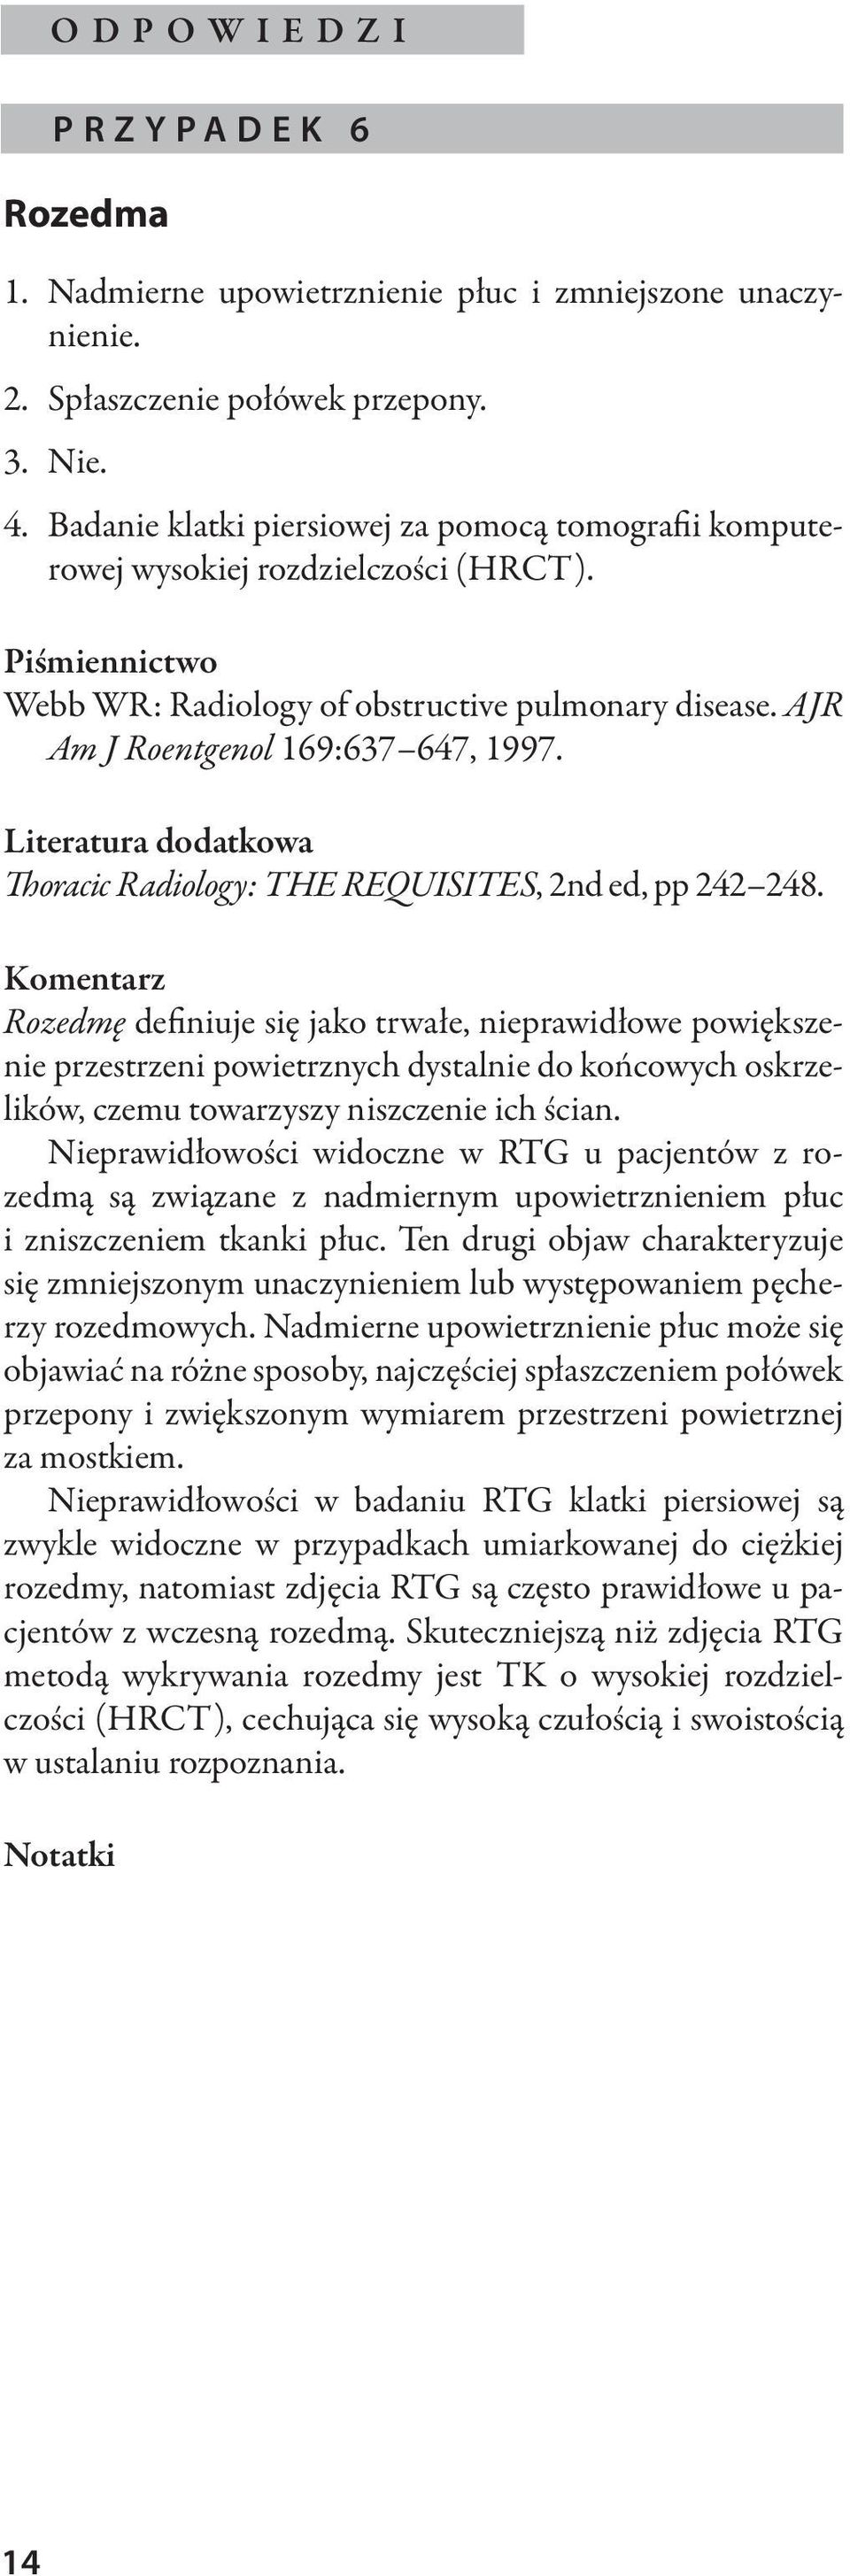 Literatura dodatkowa Thoracic Radiology: THE REQUISITES, 2nd ed, pp 242 248.